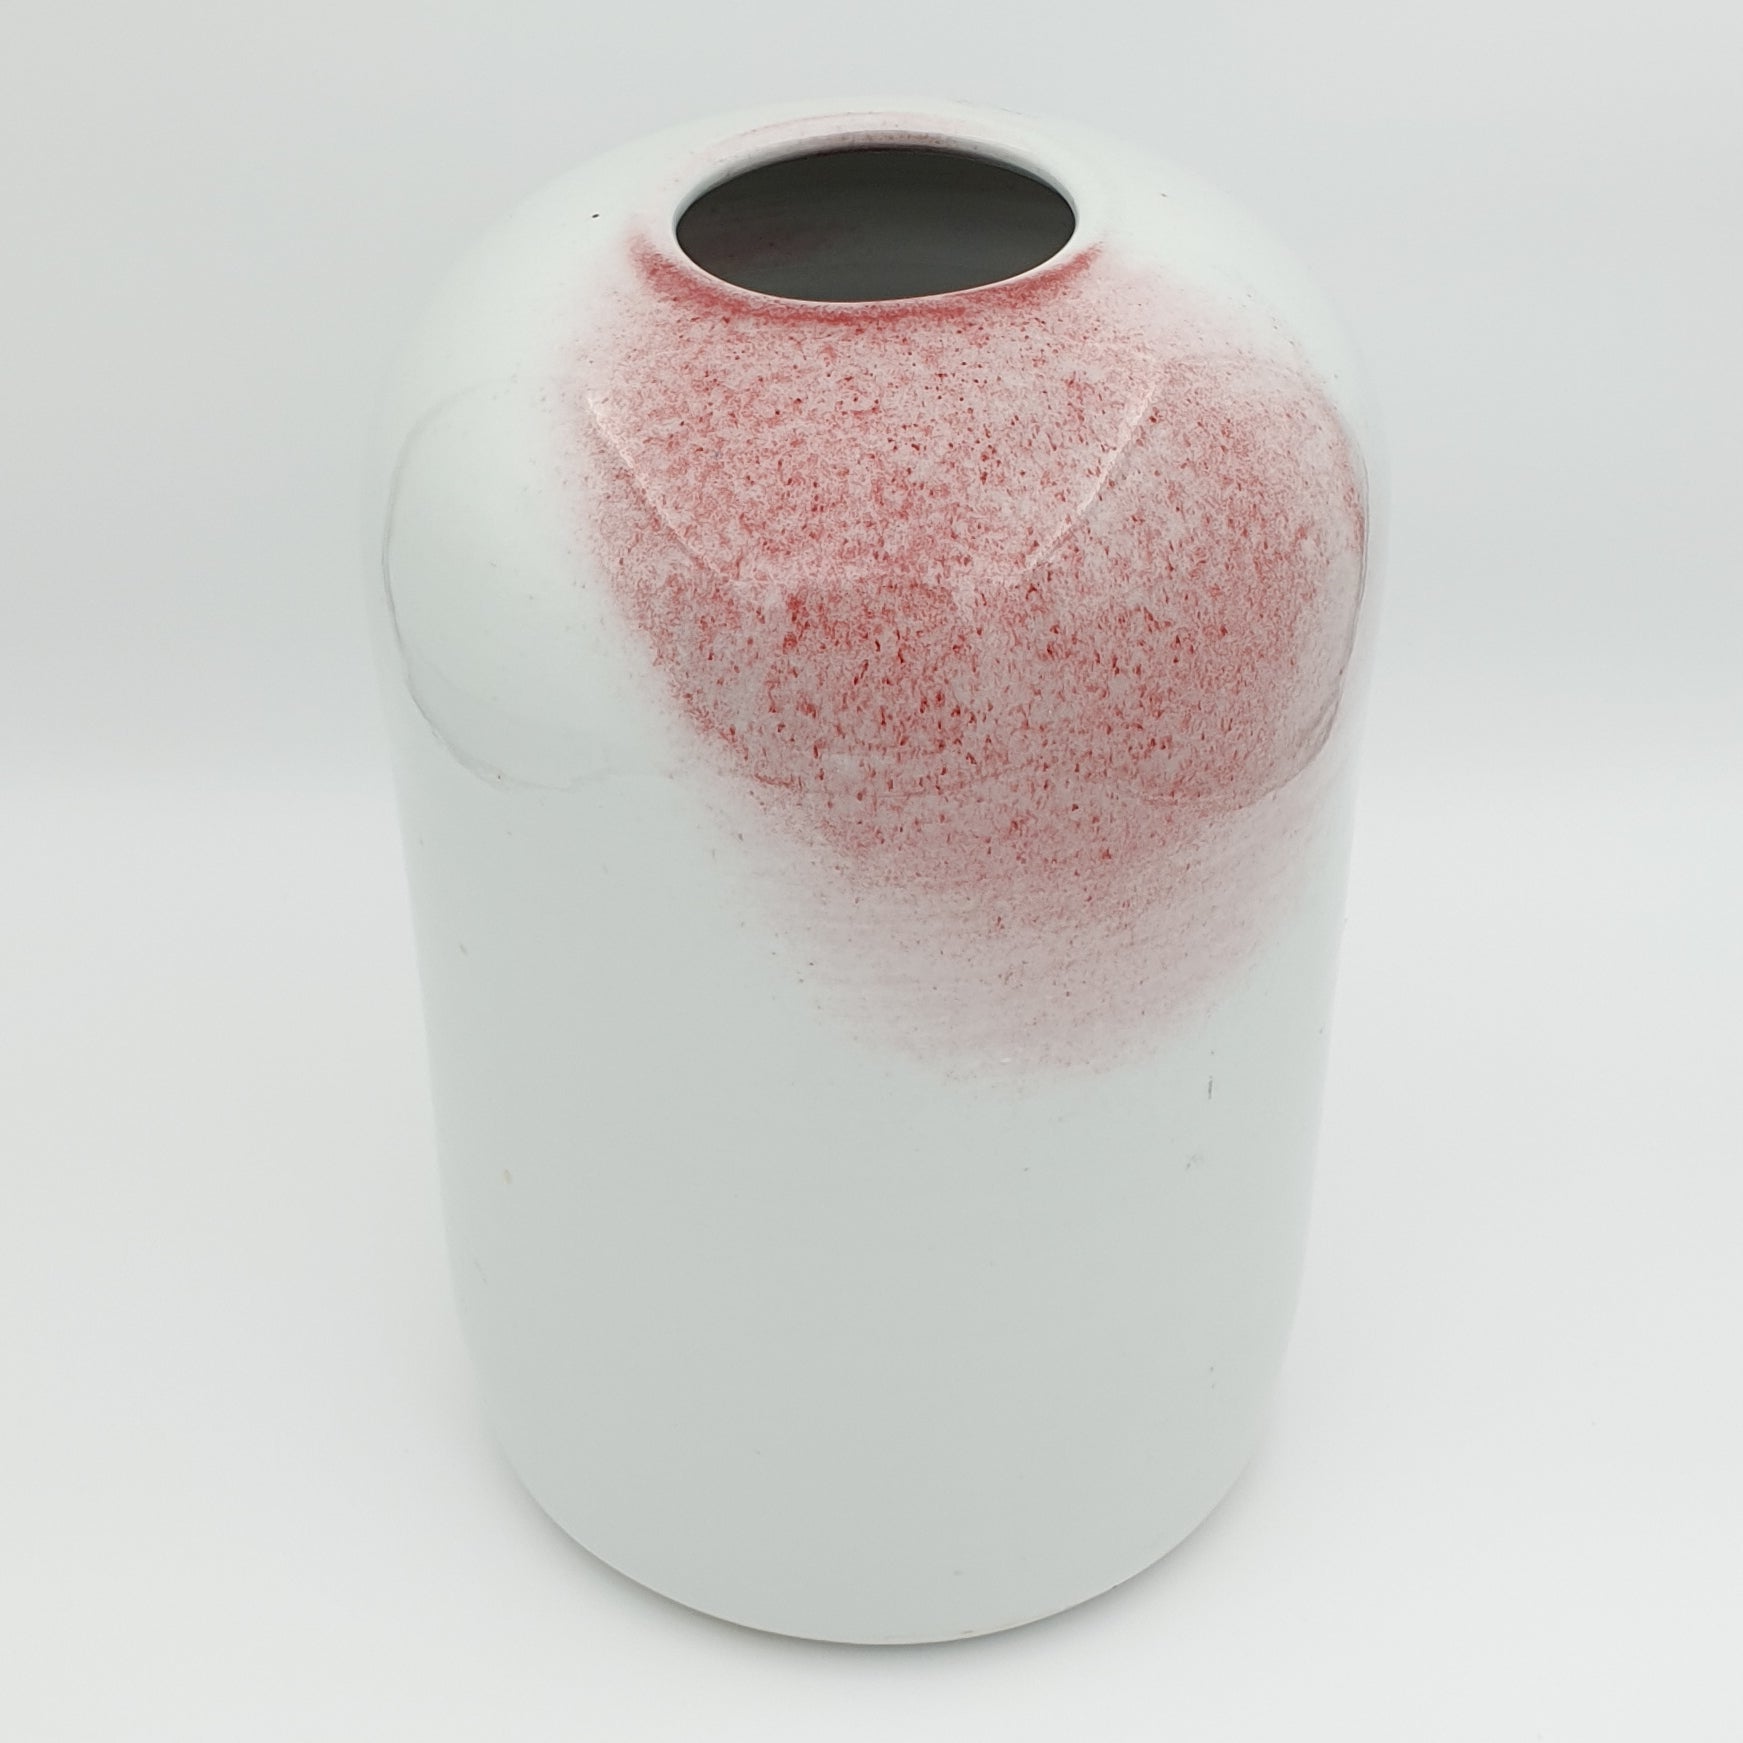 TUE POULSEN Contemporary Studio White and Red Mist Glazed Large Porcelain Vase Mollaris.com 